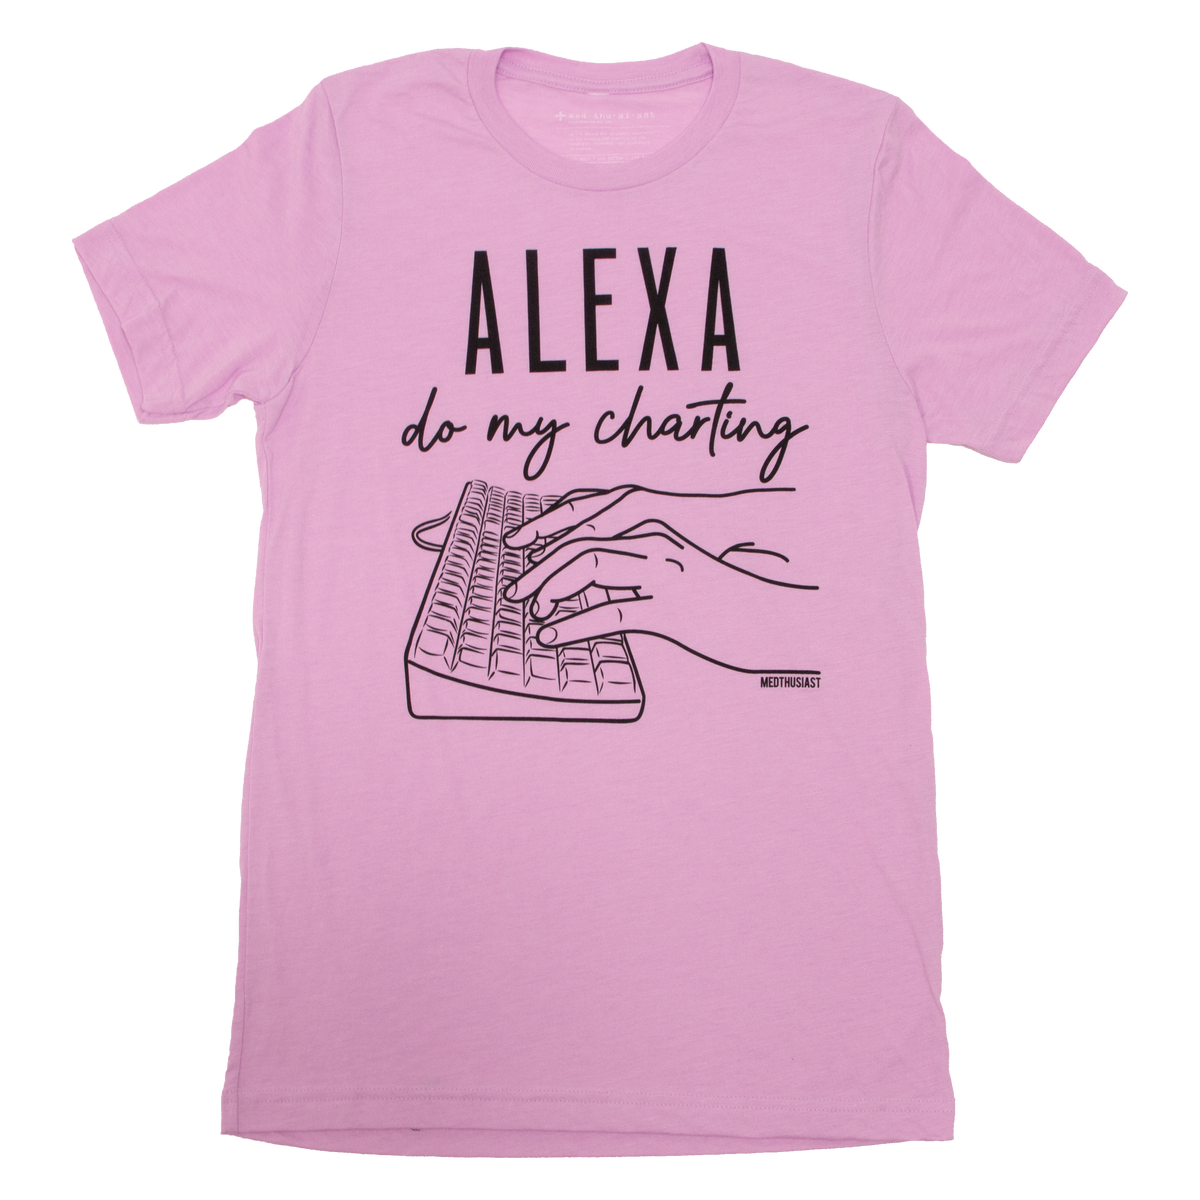 Alexa Do My Charting Tee - FINAL SALE